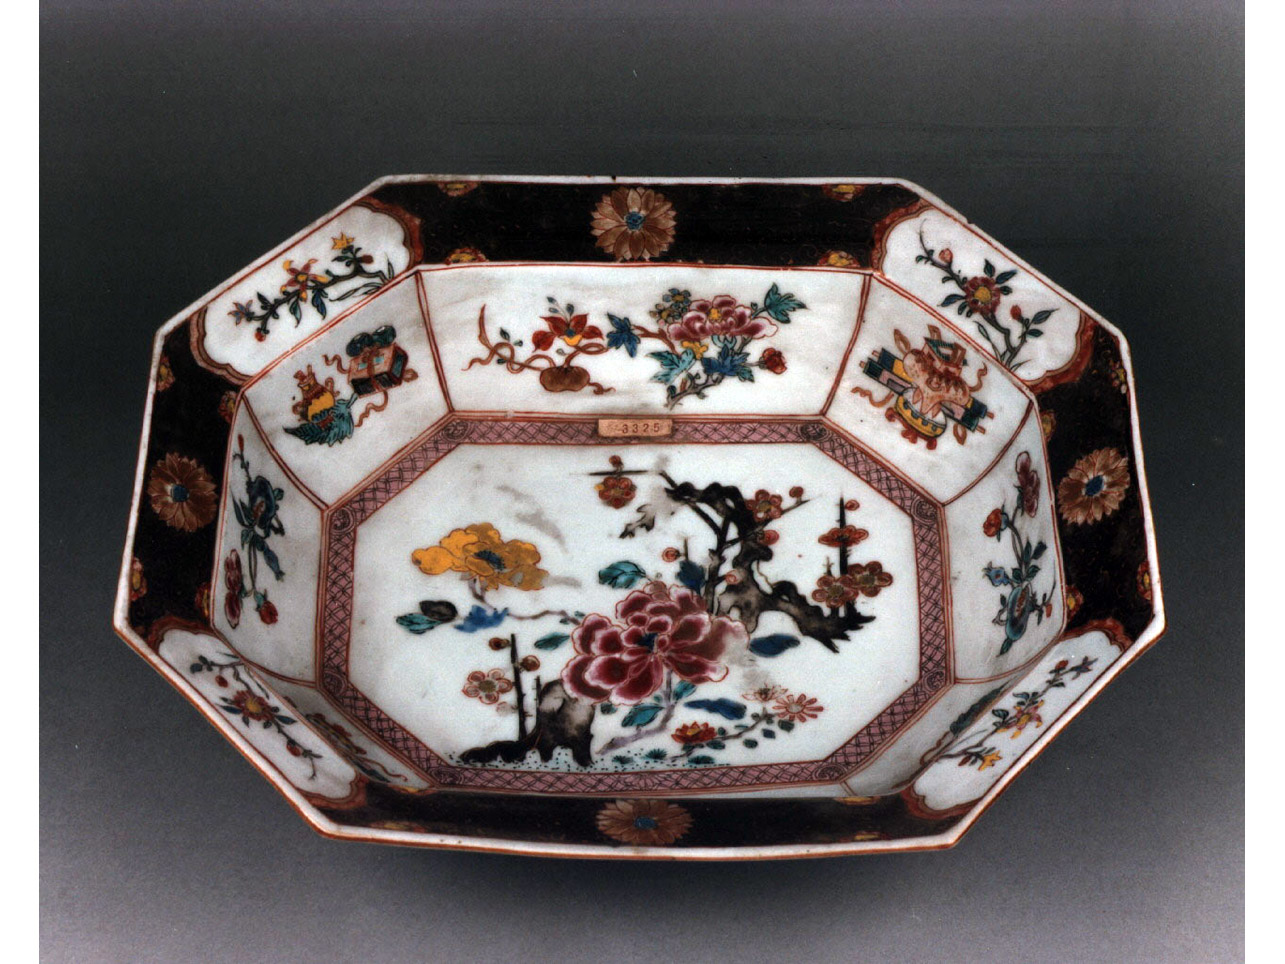 motivi decorativi floreali (bacile) - manifattura cinese (sec. XVIII)